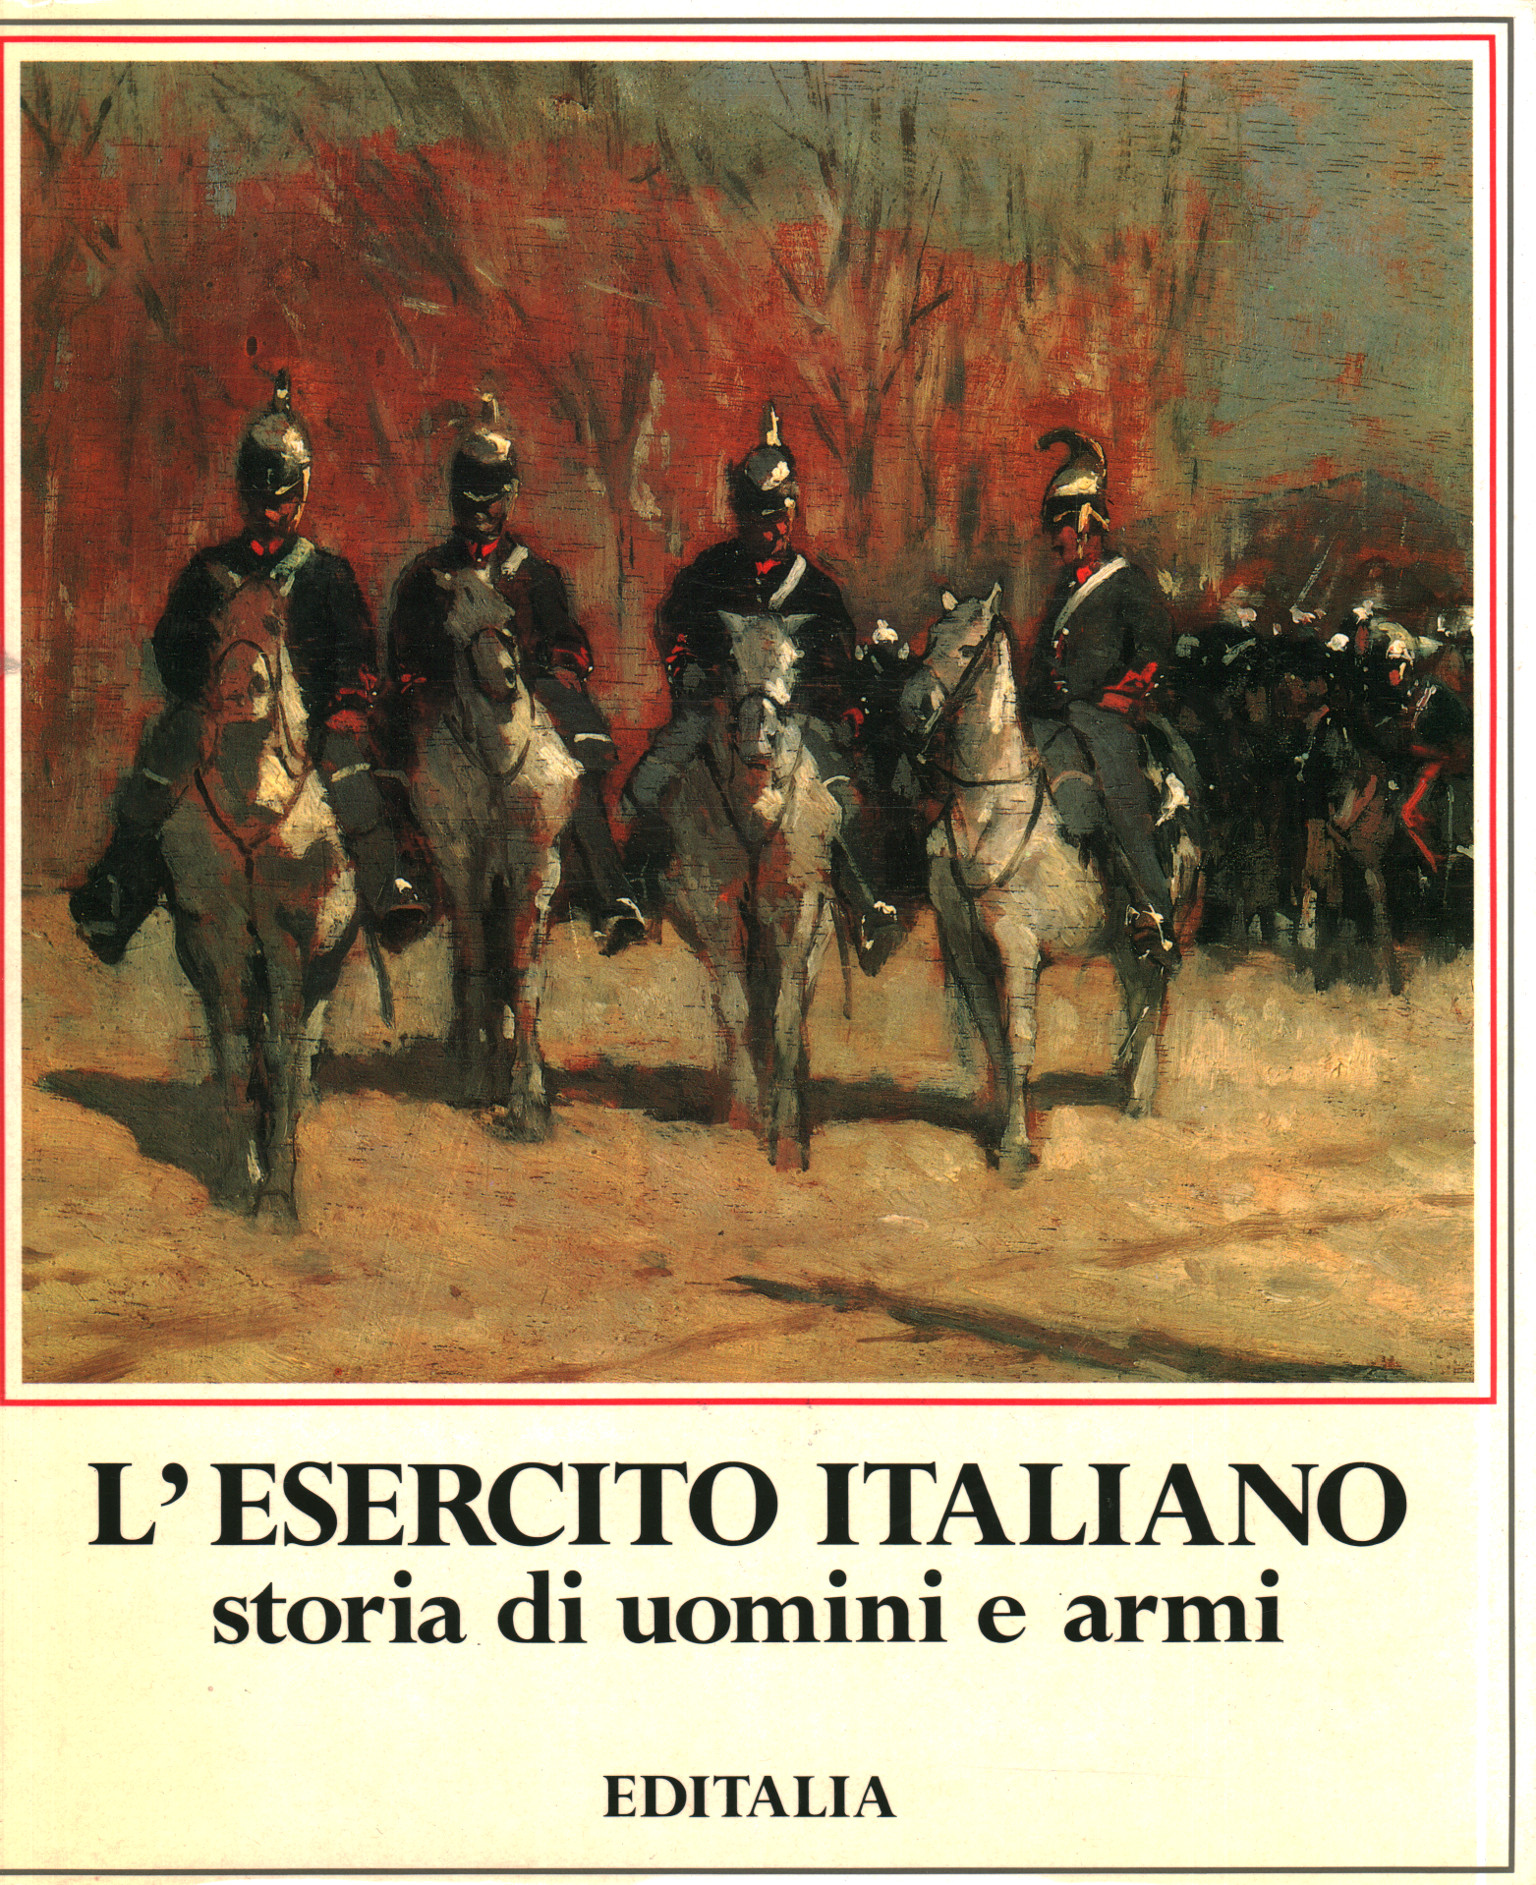 The Italian army history of men and weapons, Arrigo Pecchioli